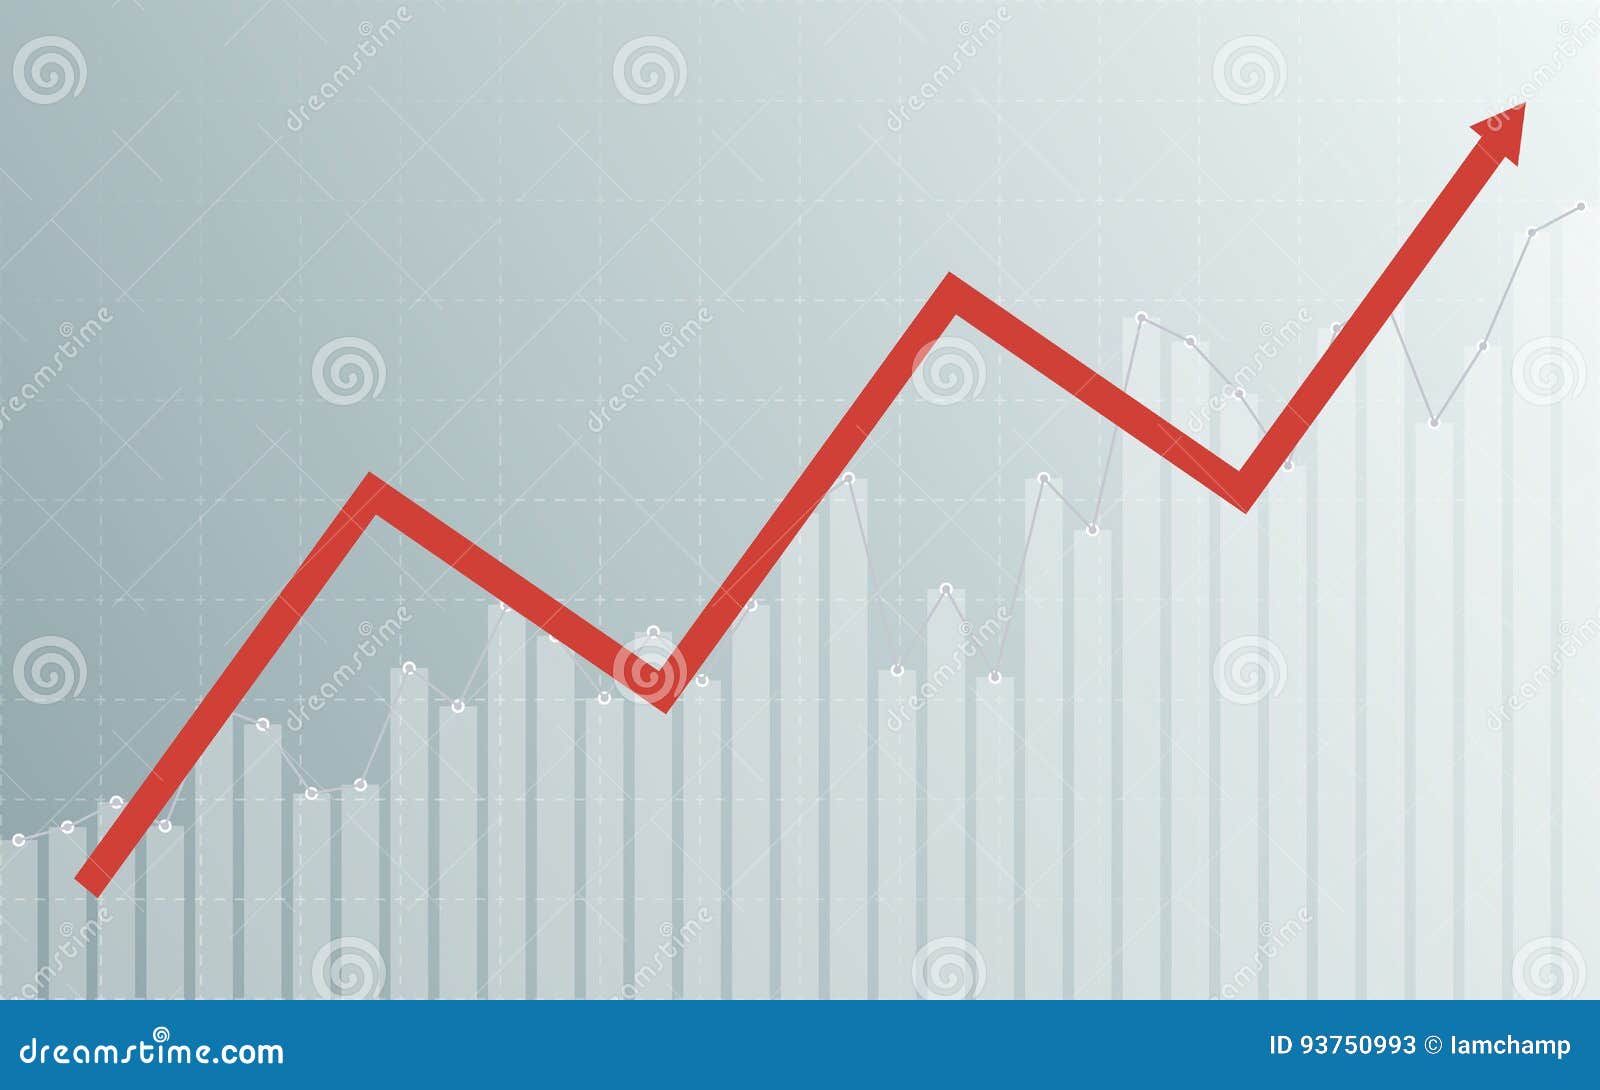 Stock Market Bar Chart